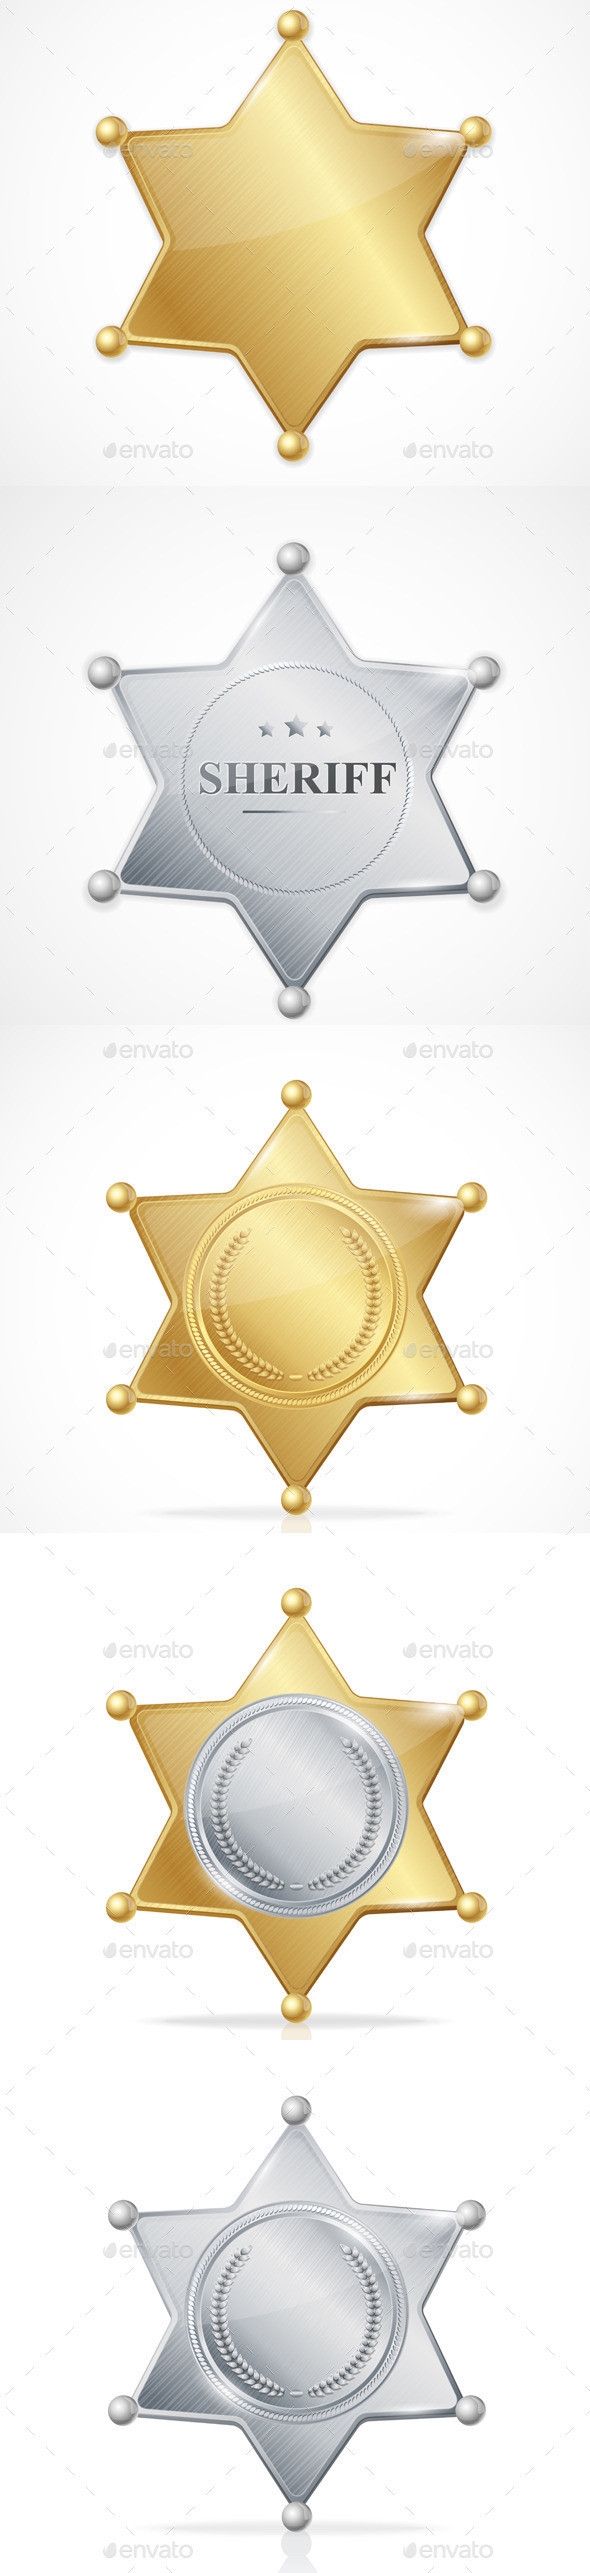 Sheriff badge star 590